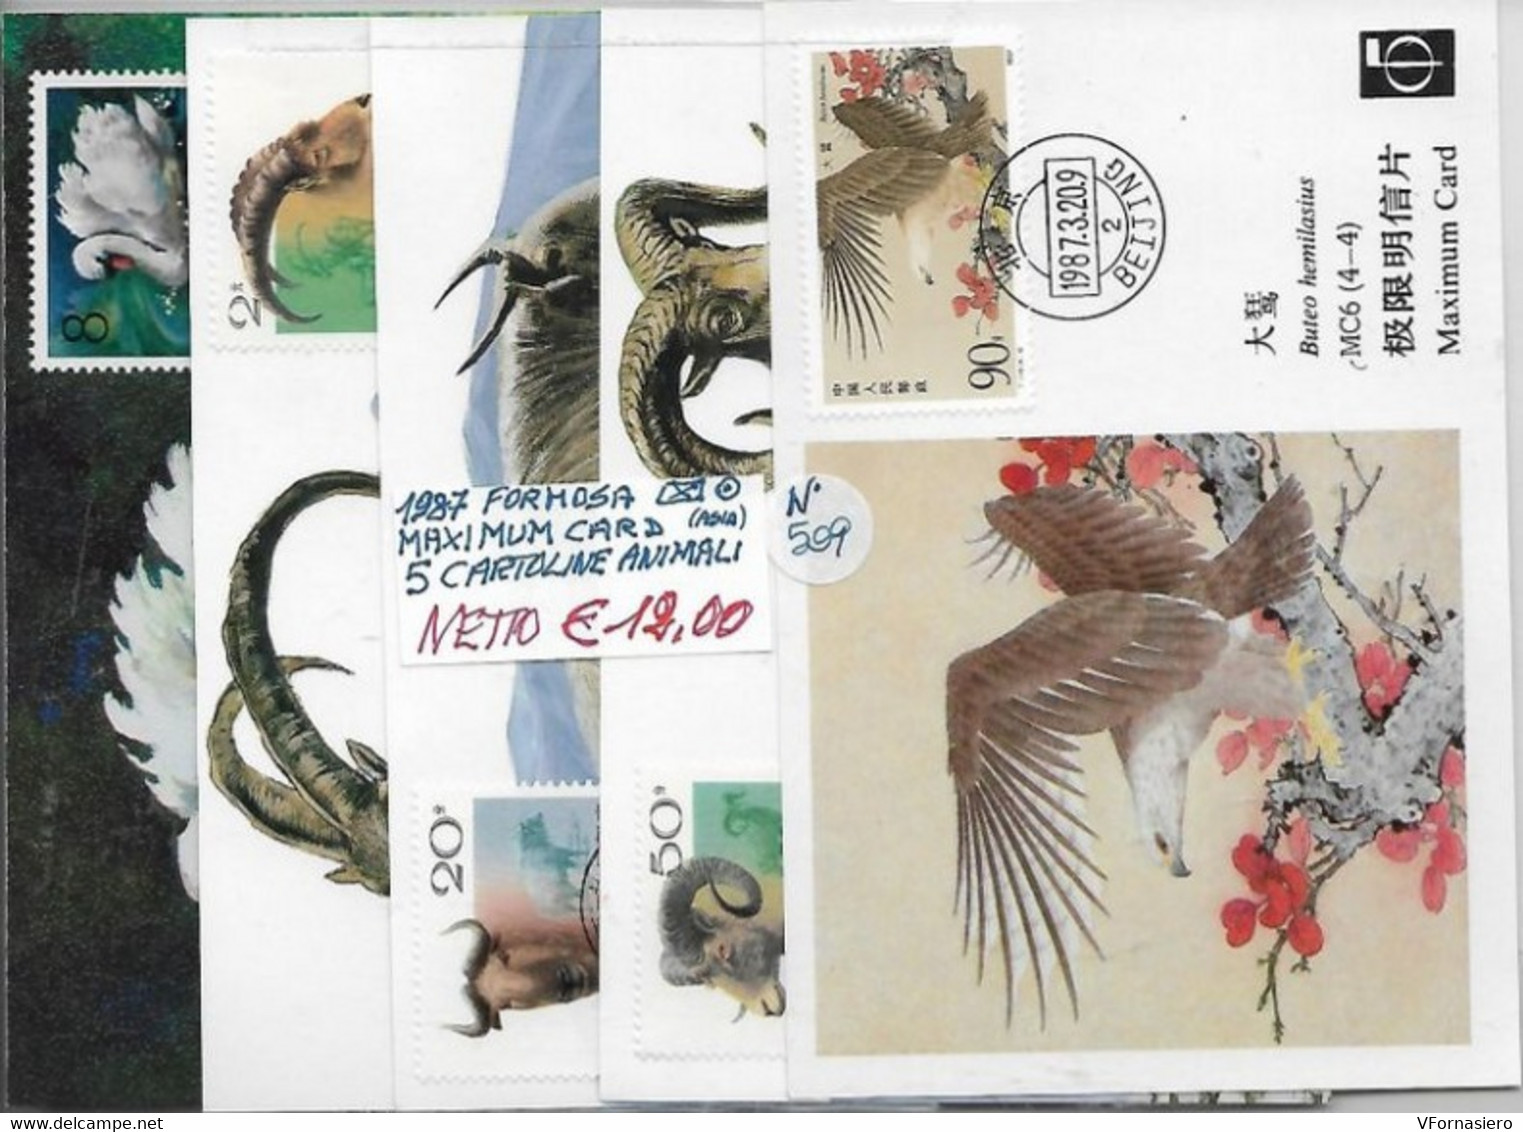 FORMOSA ʘ 1987, MAXIMUM CARD, 5 CARTOLINE ANIMALI - Formose